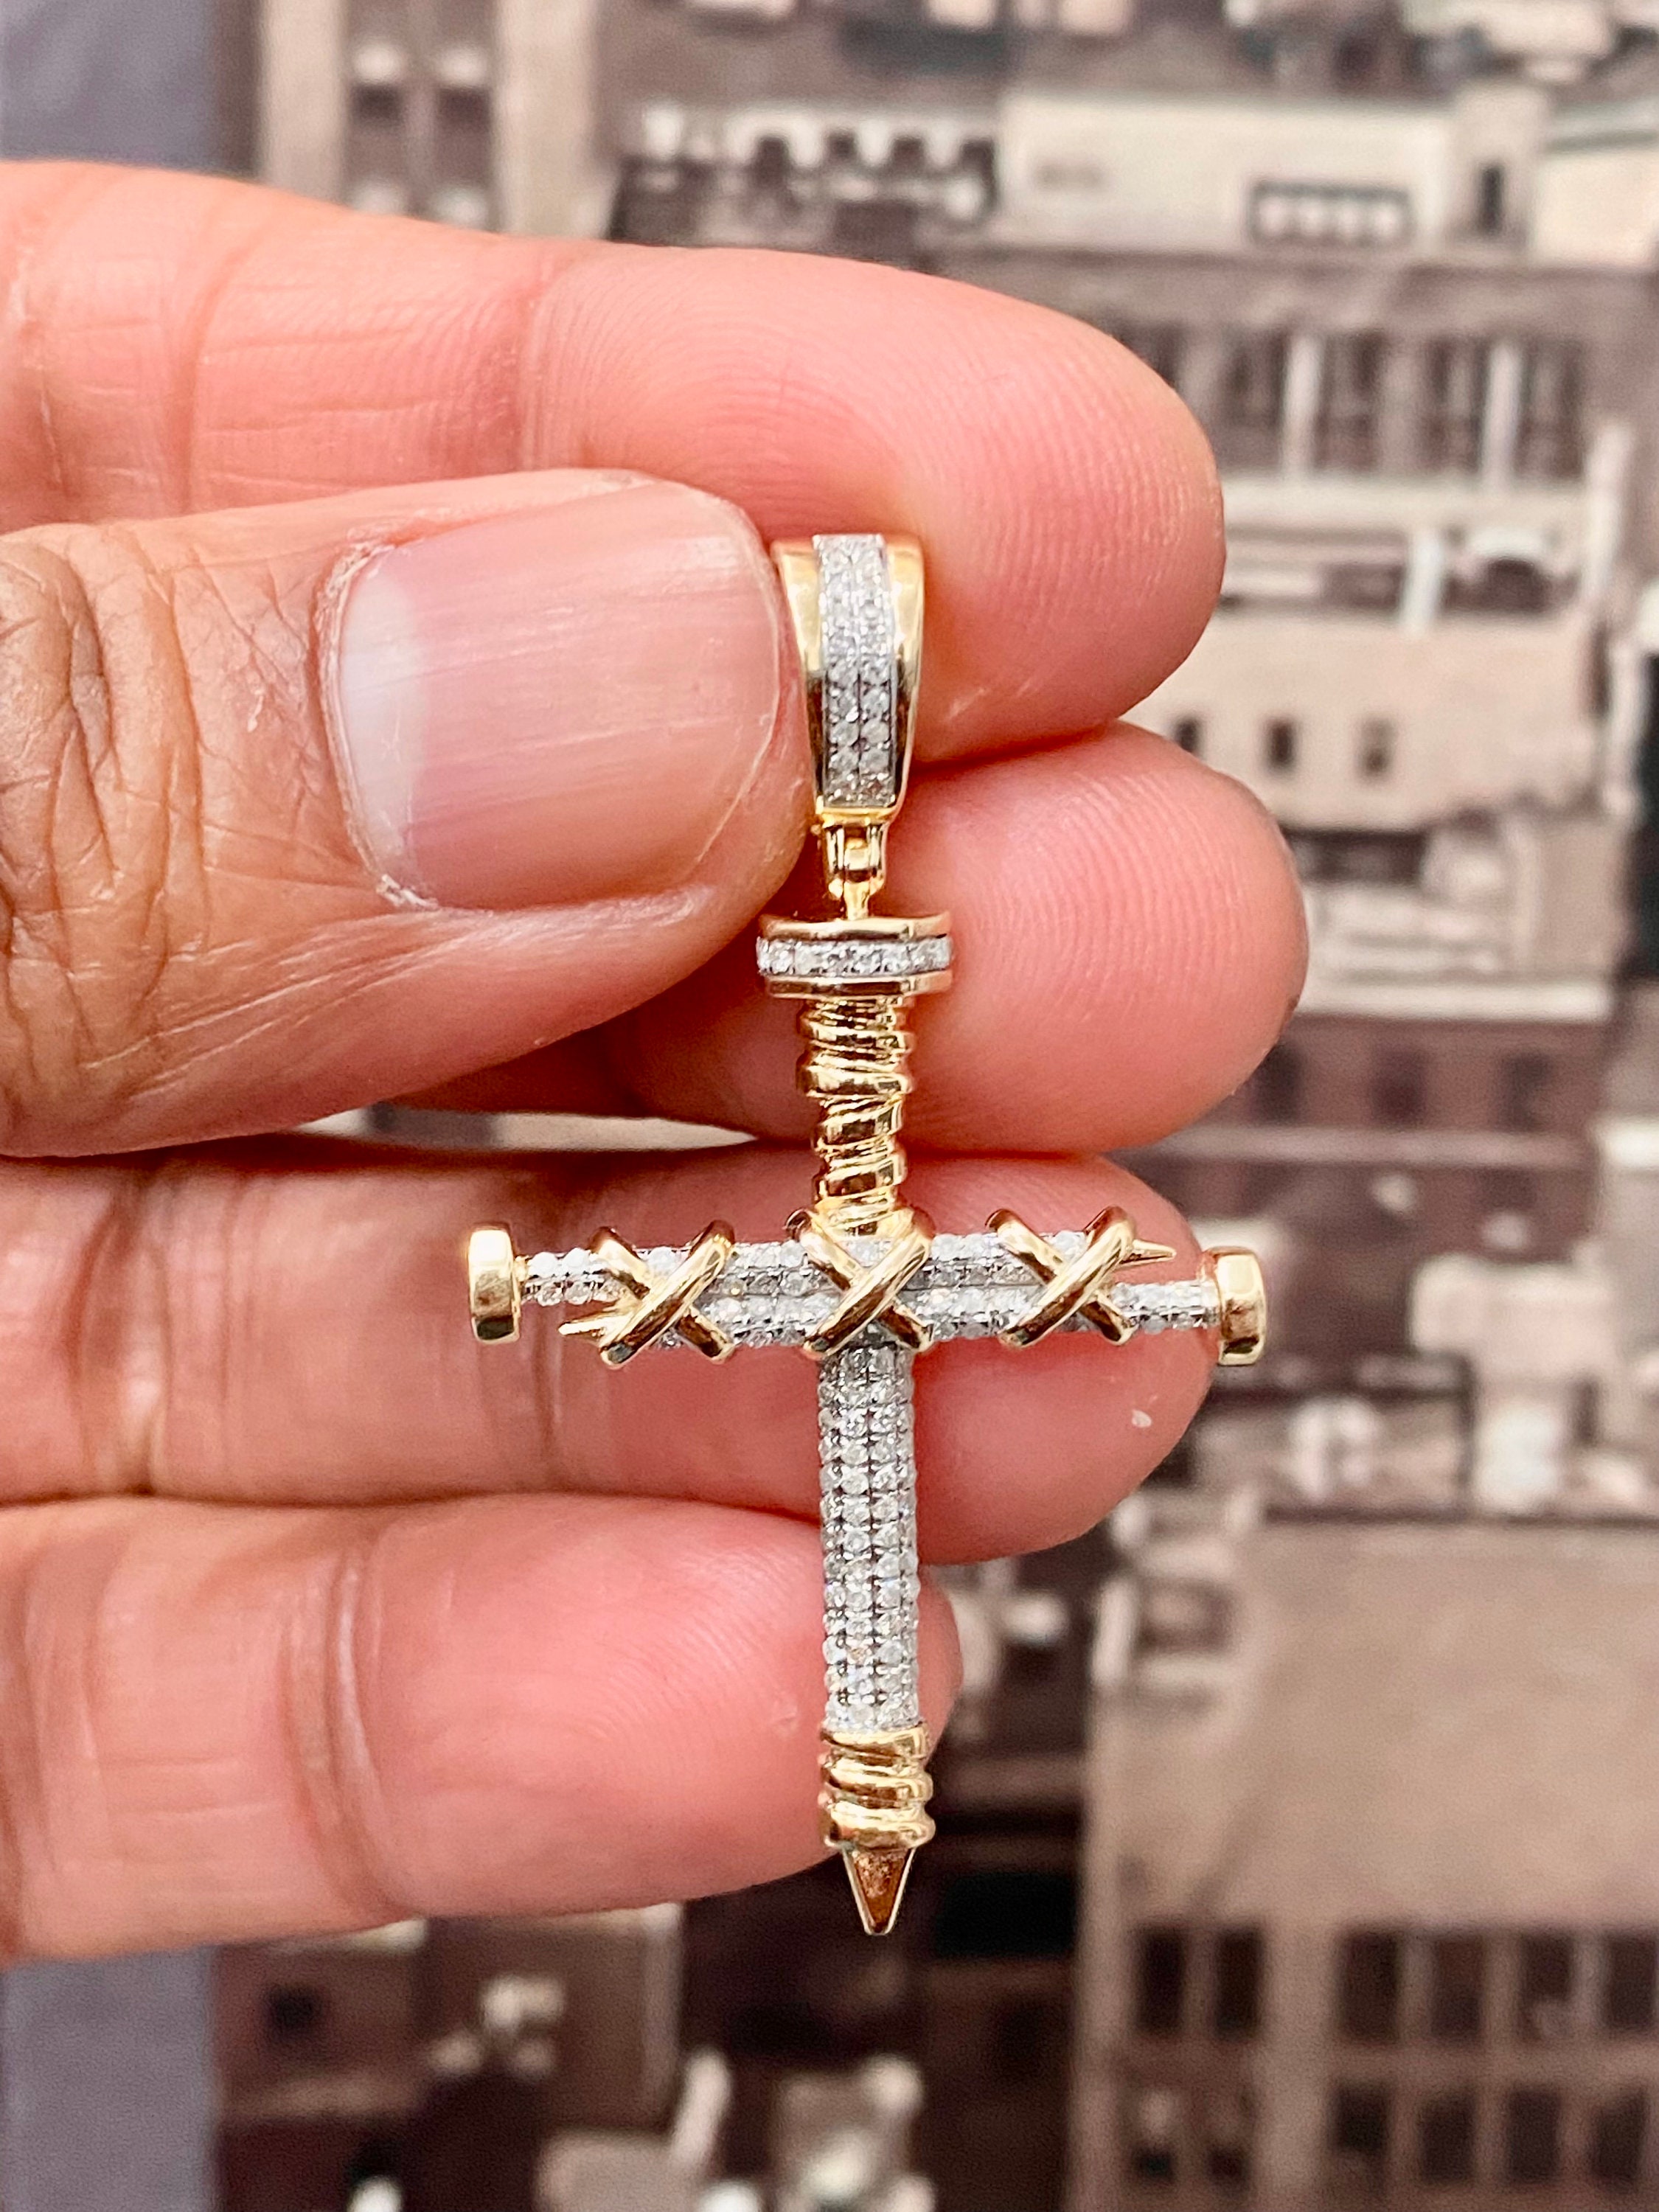 Pjtewawe Nails 3D Nail Diamonds Art Charms Nail Gold Charms For Acrylic  Nails RhinestonesNail Gems And Jewels Nail Stones Design